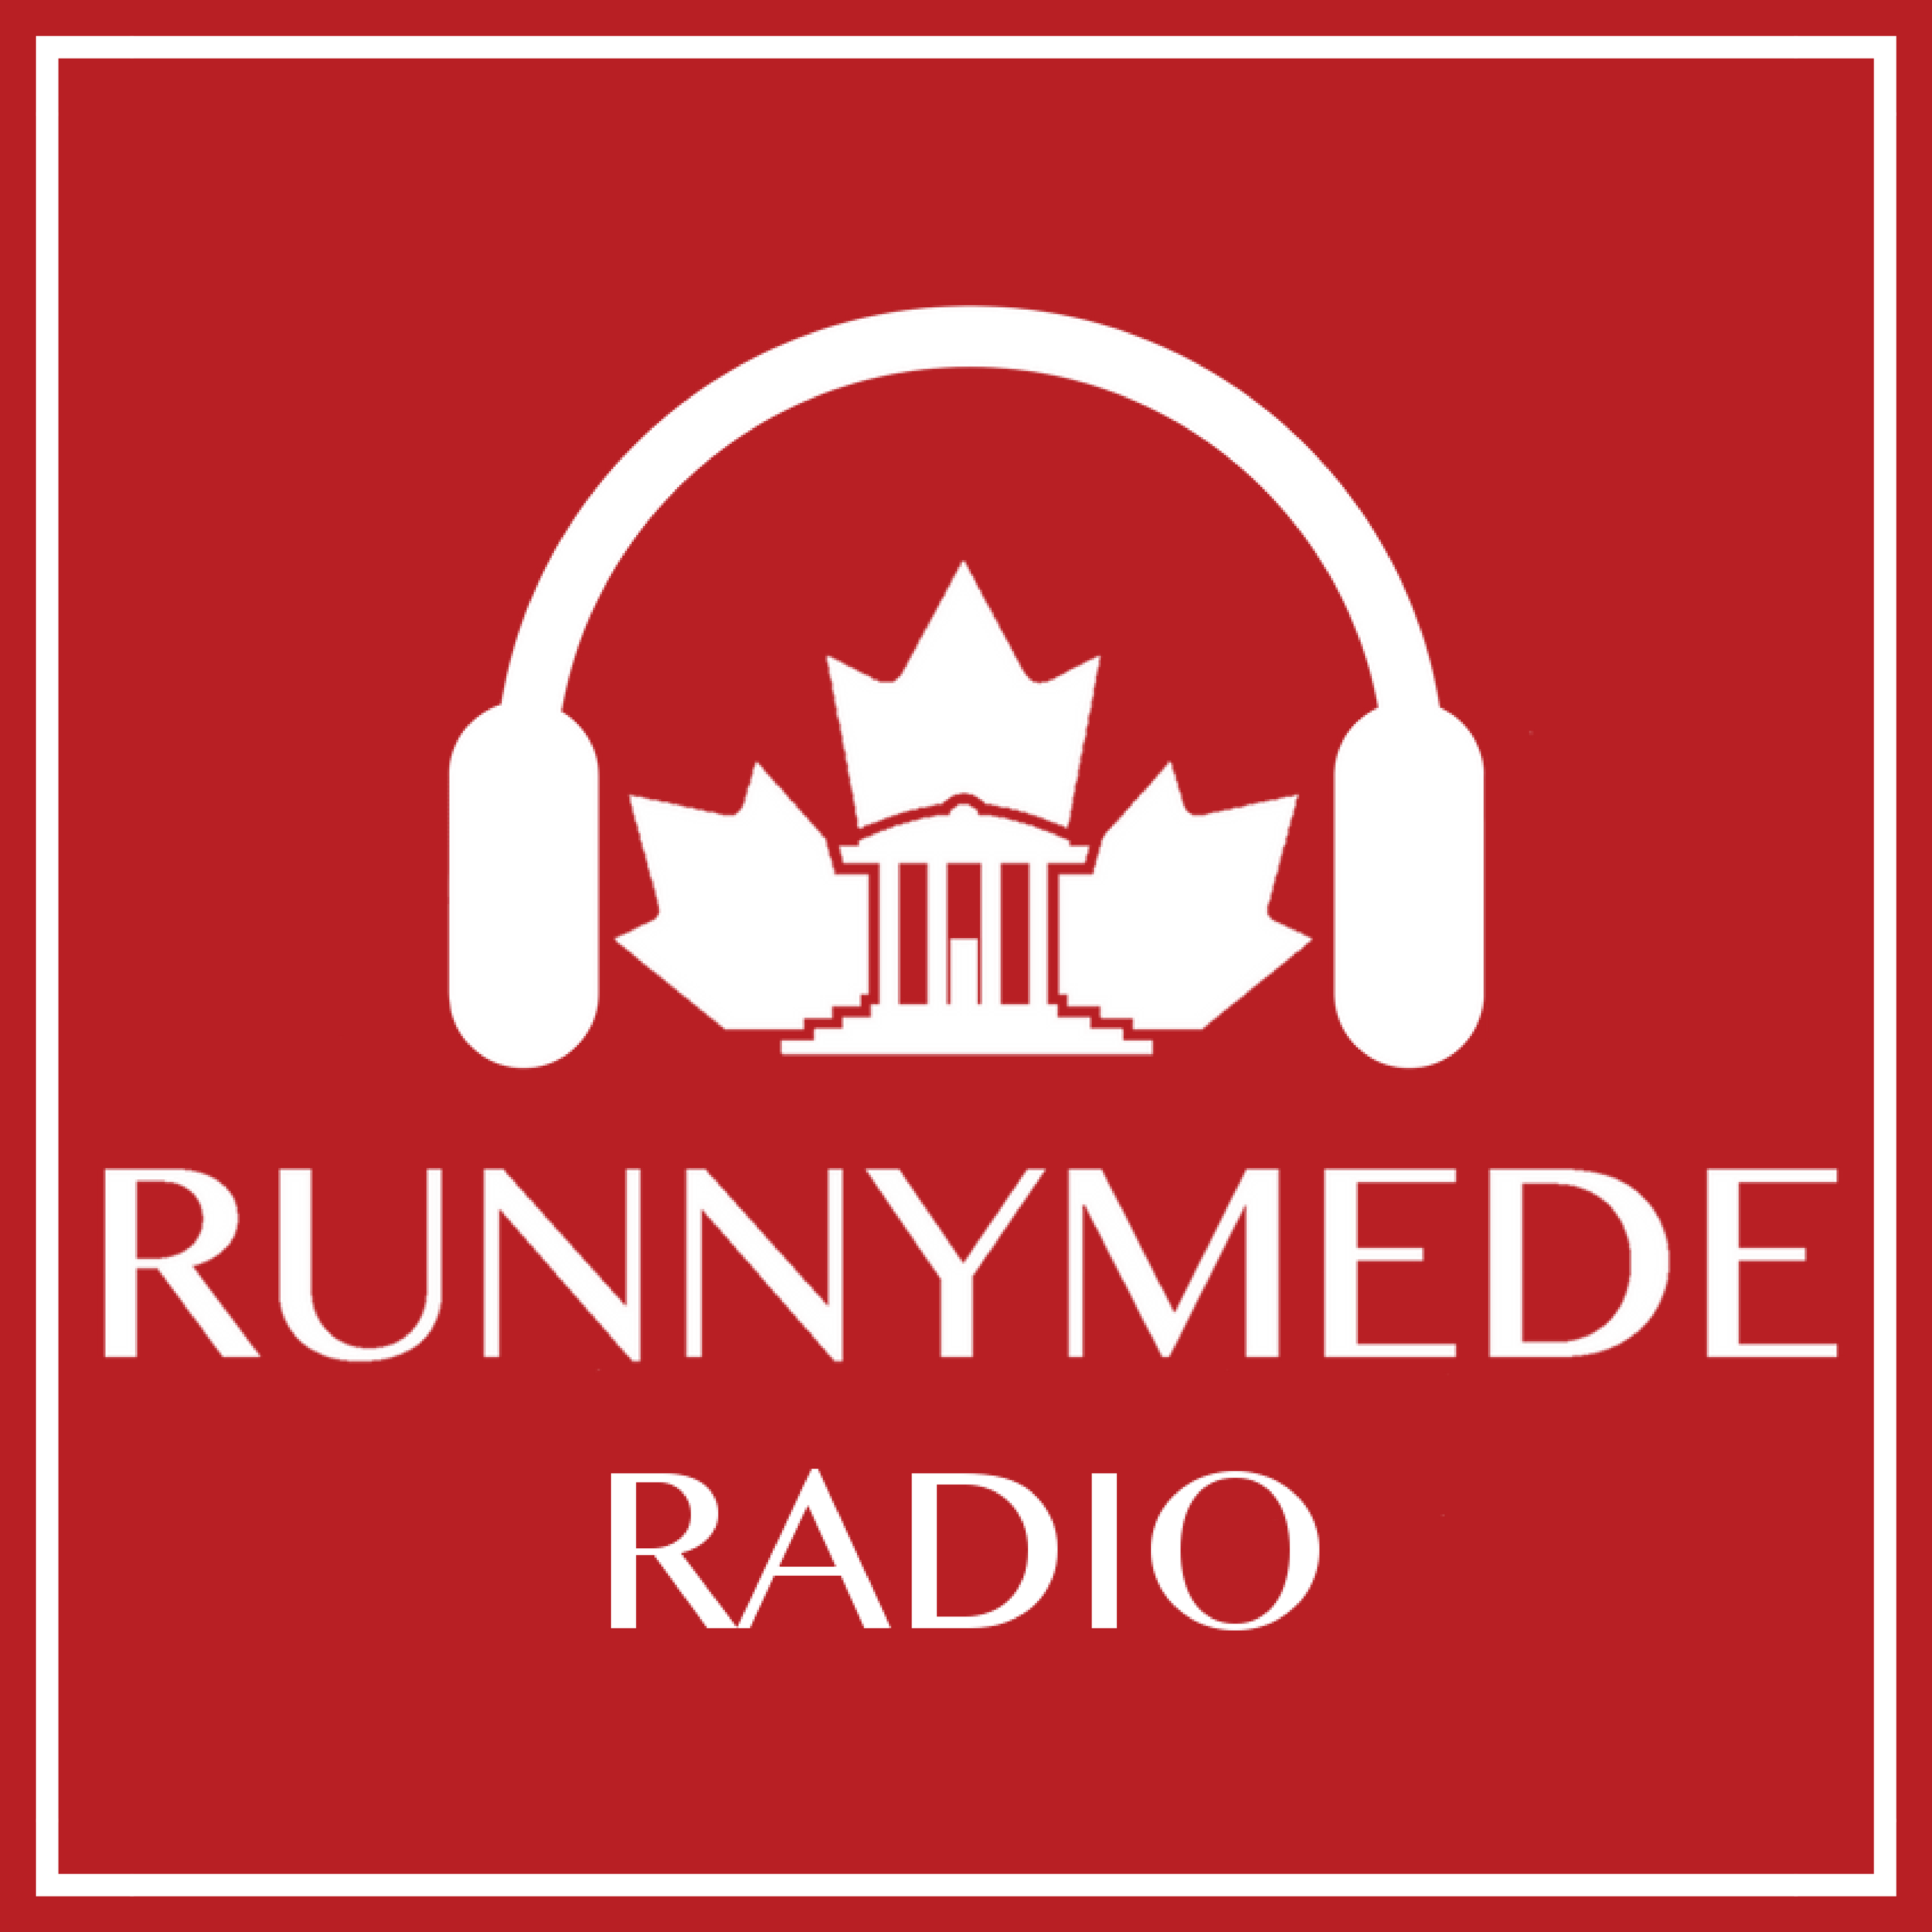 Runnymede Radio